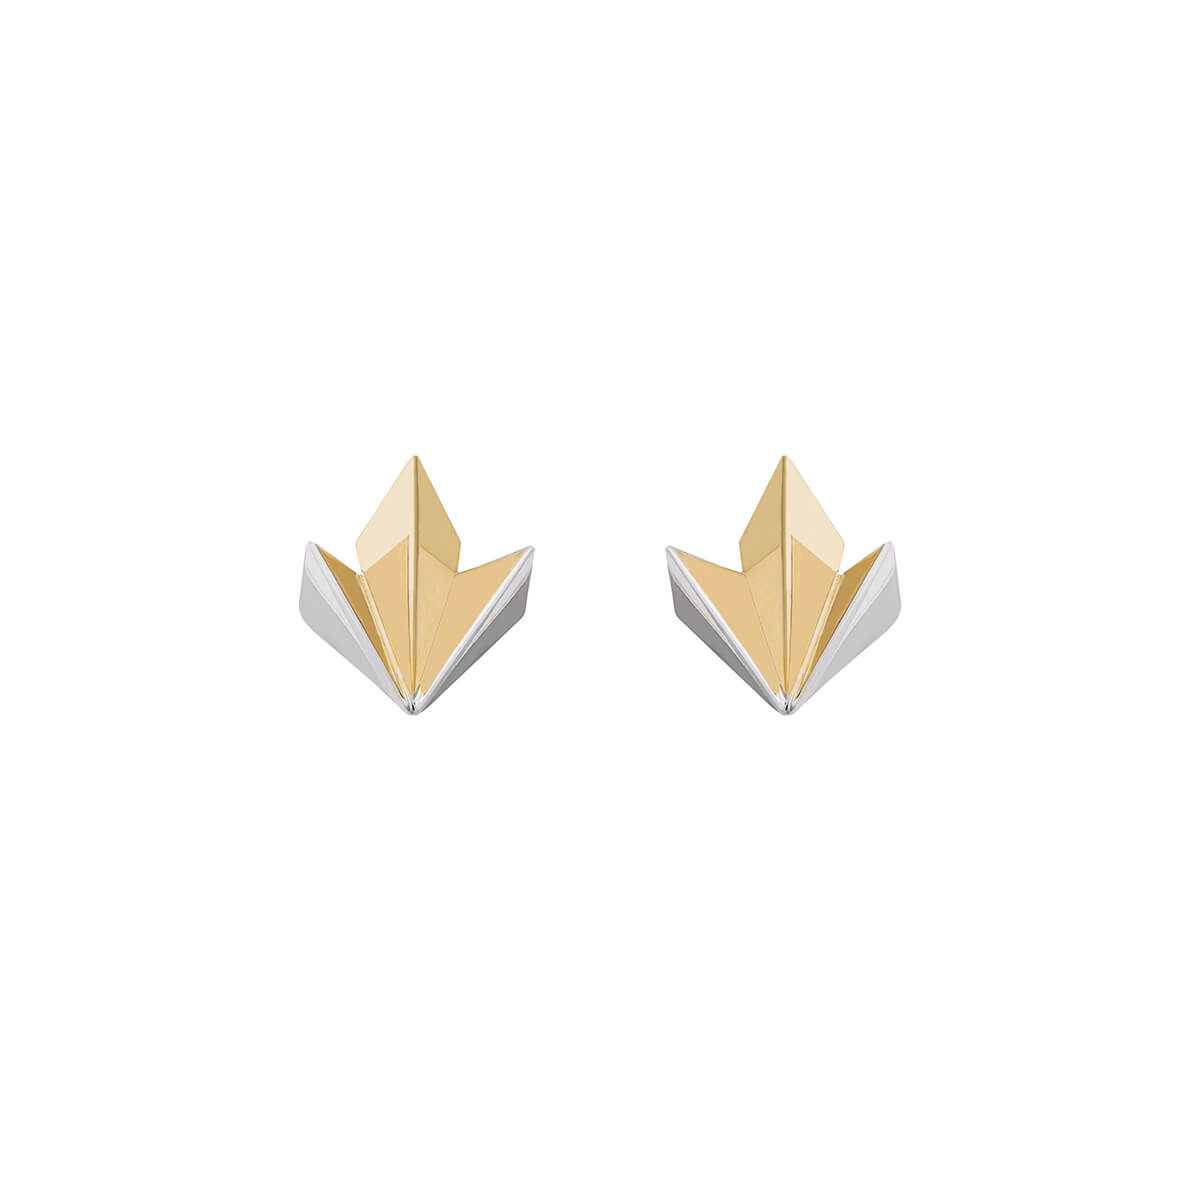 Mini Crown Leaf Earrings